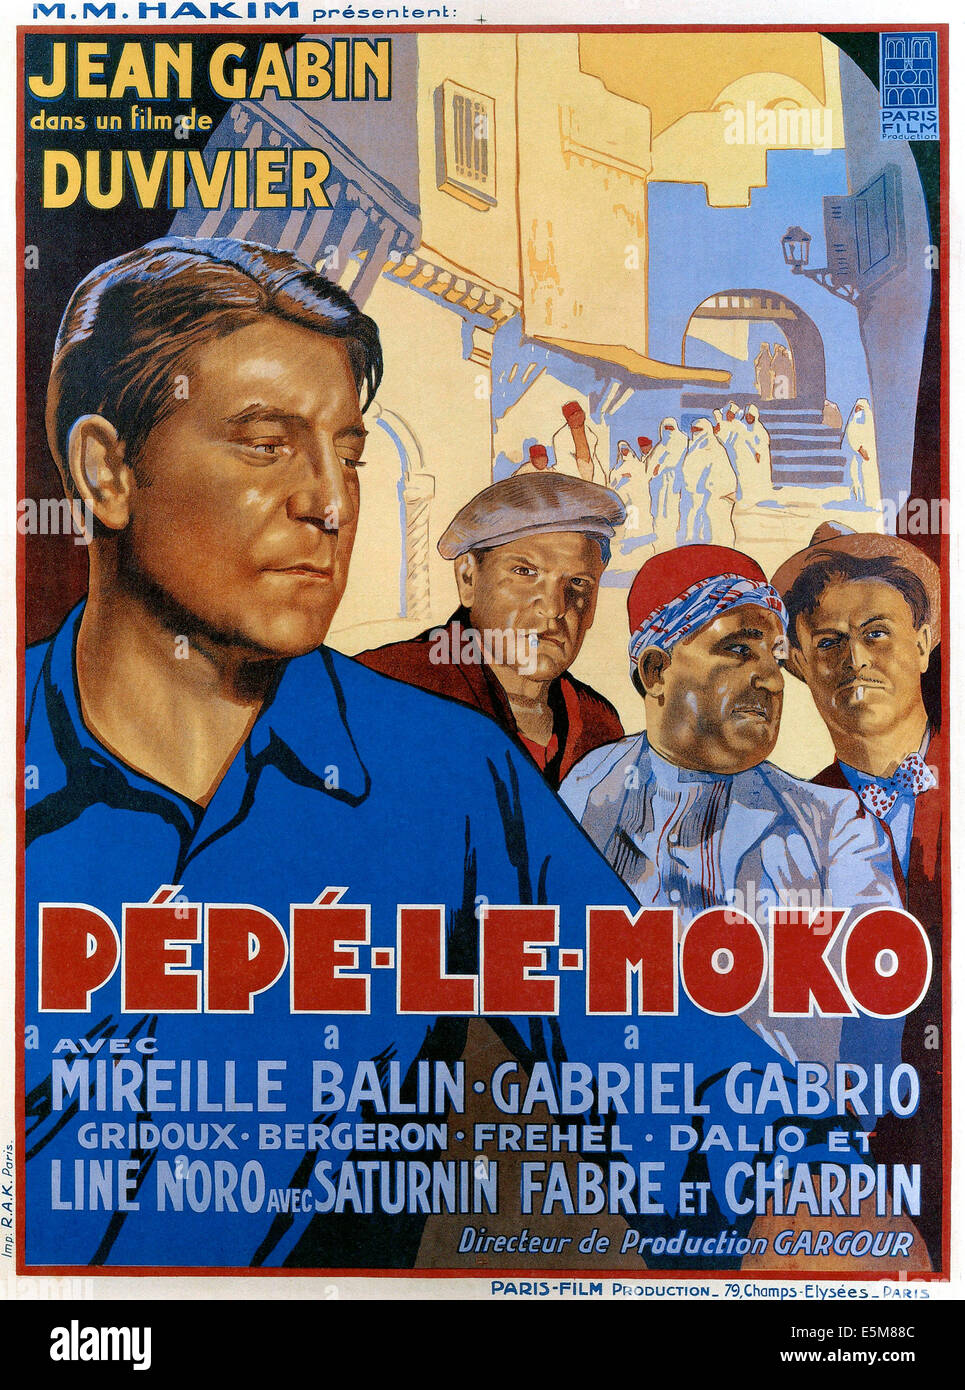 PEPE LE MOKO, Jean Gabin (left), 1937 Stock Photo